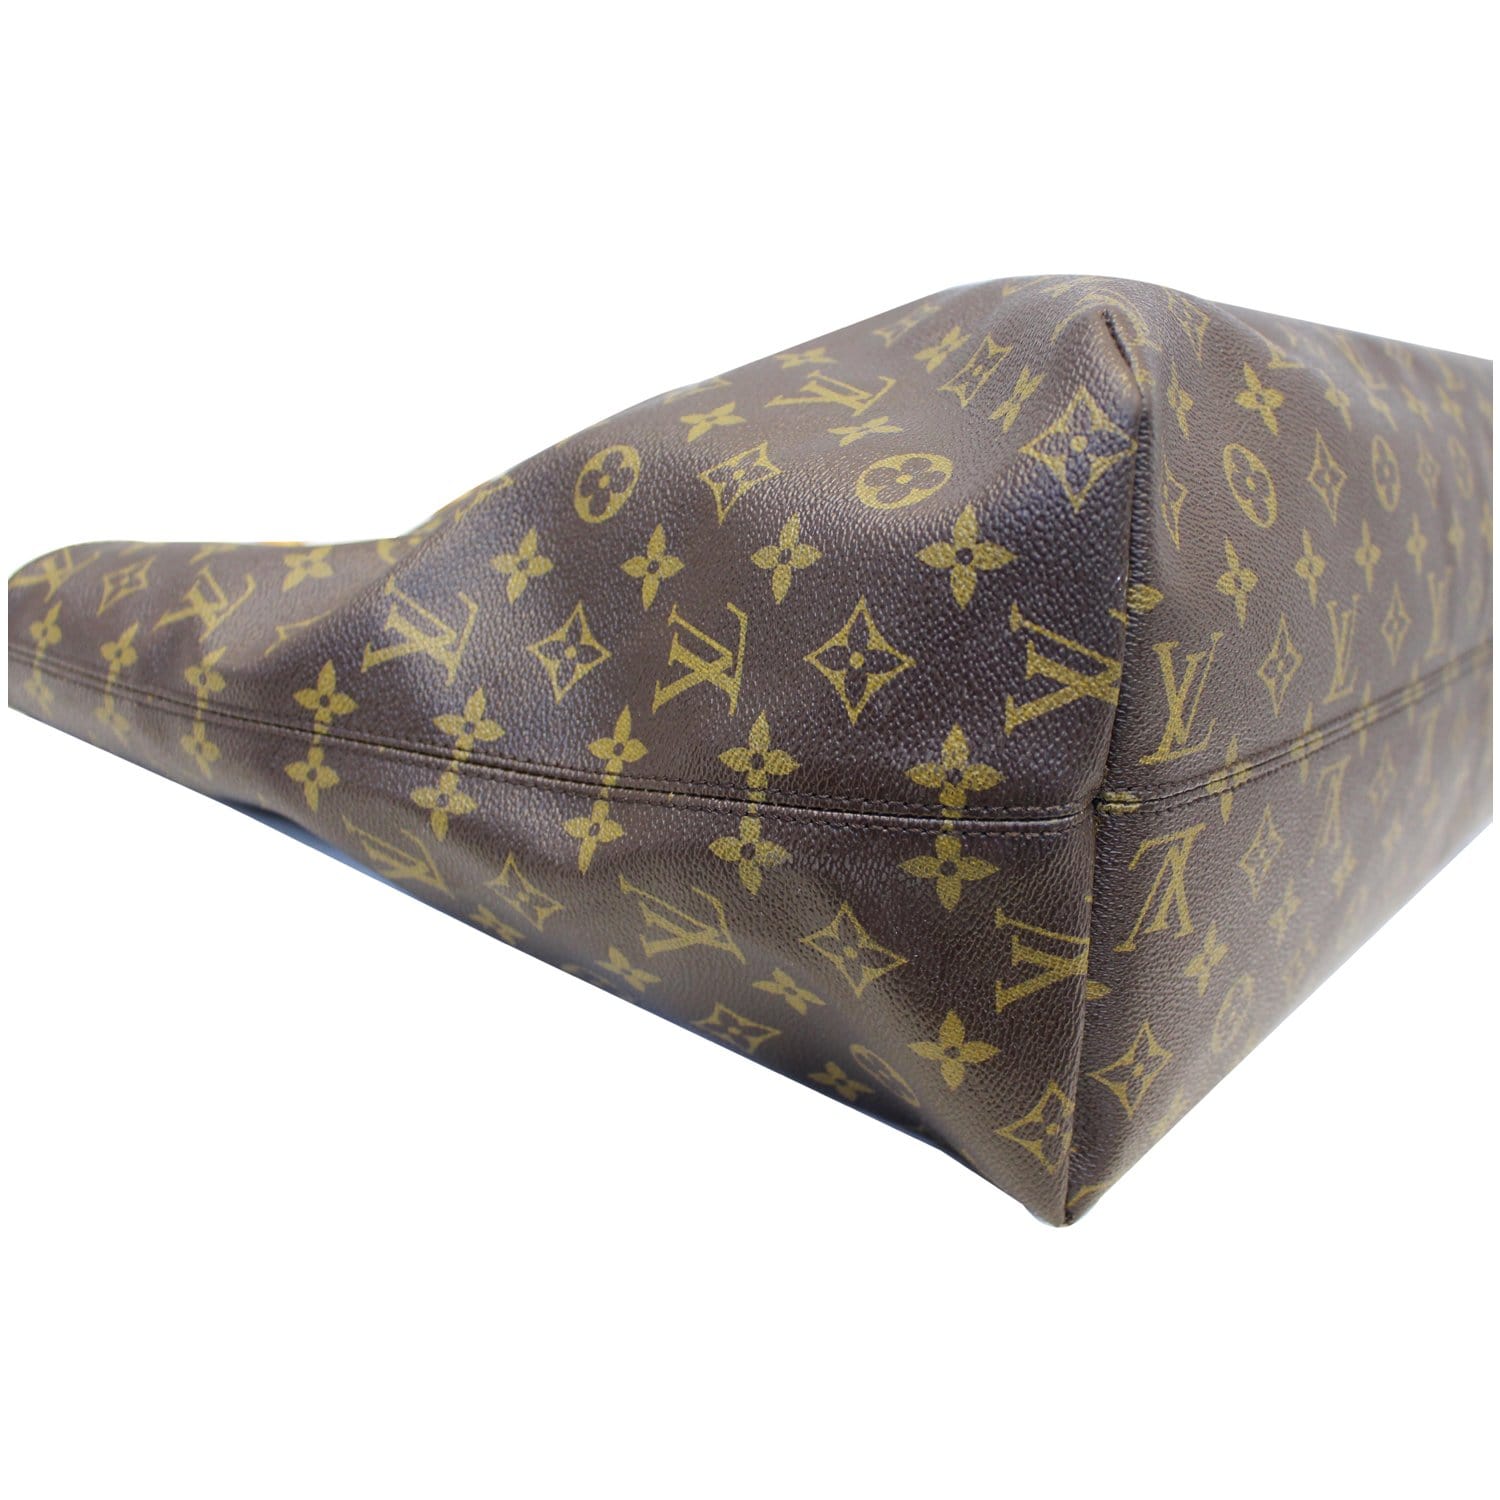 VERY RARE ❤️ Beautiful Authentic LV Raspail Crossbody/Shoulder Bag Monogram